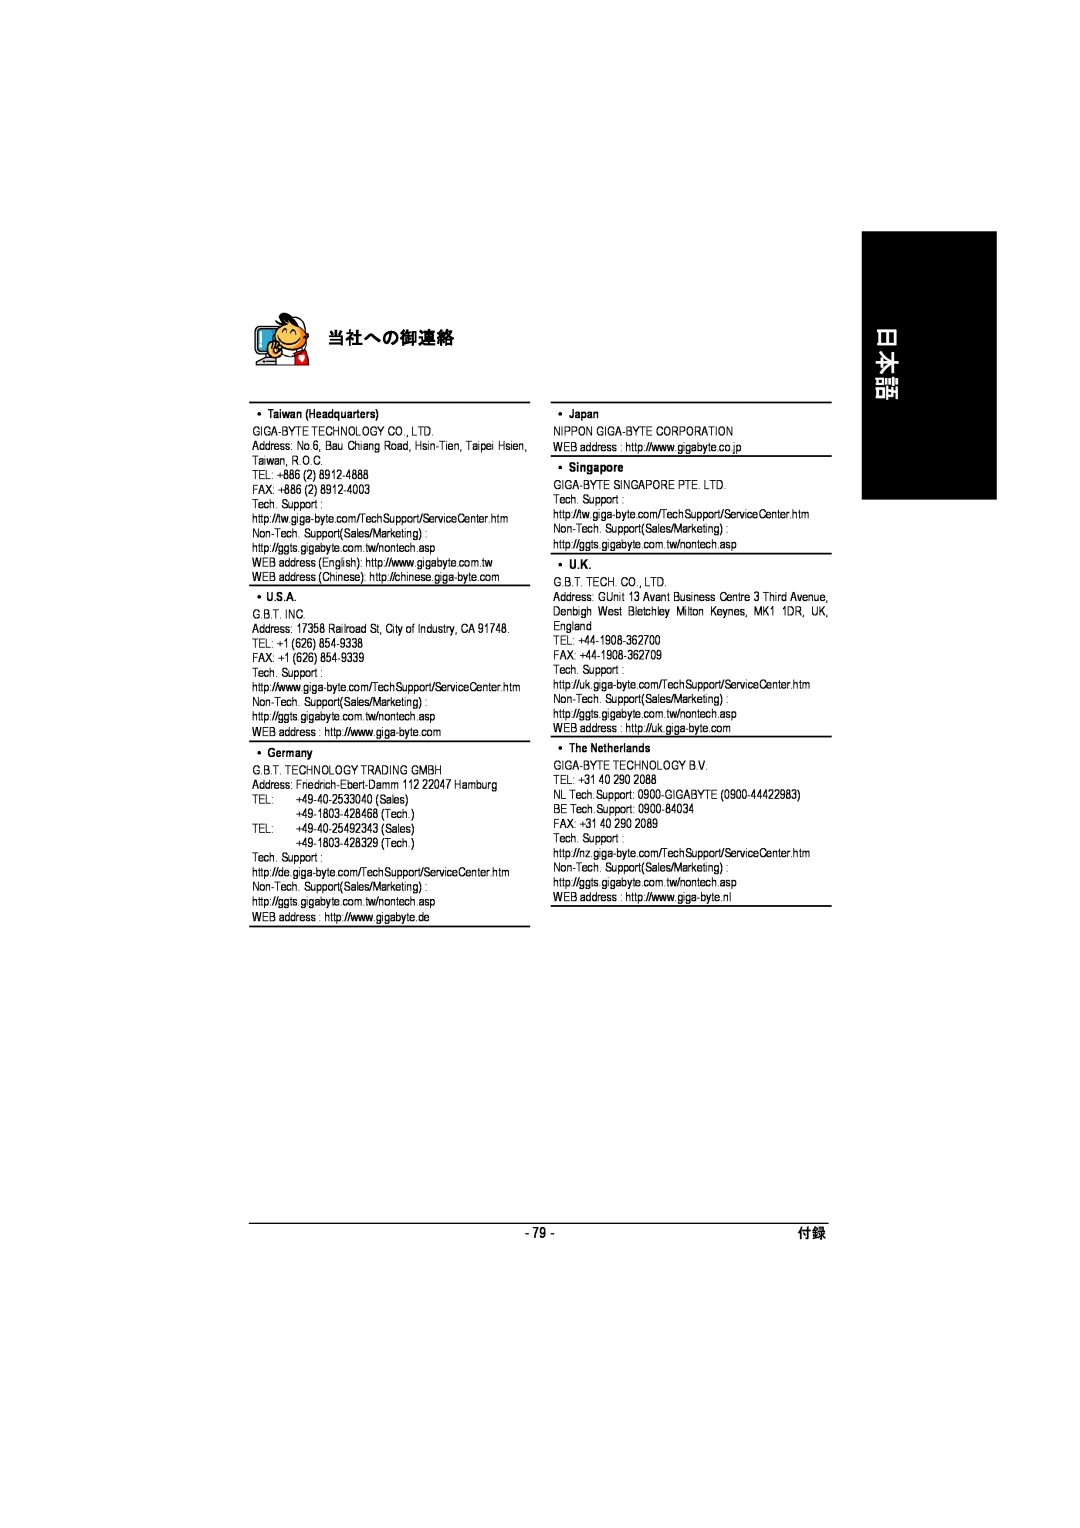 Intel GA-8I915P manual 当社への御連絡, Singapore, Taiwan Headquarters, U.S.A, Germany, Japan, The Netherlands 